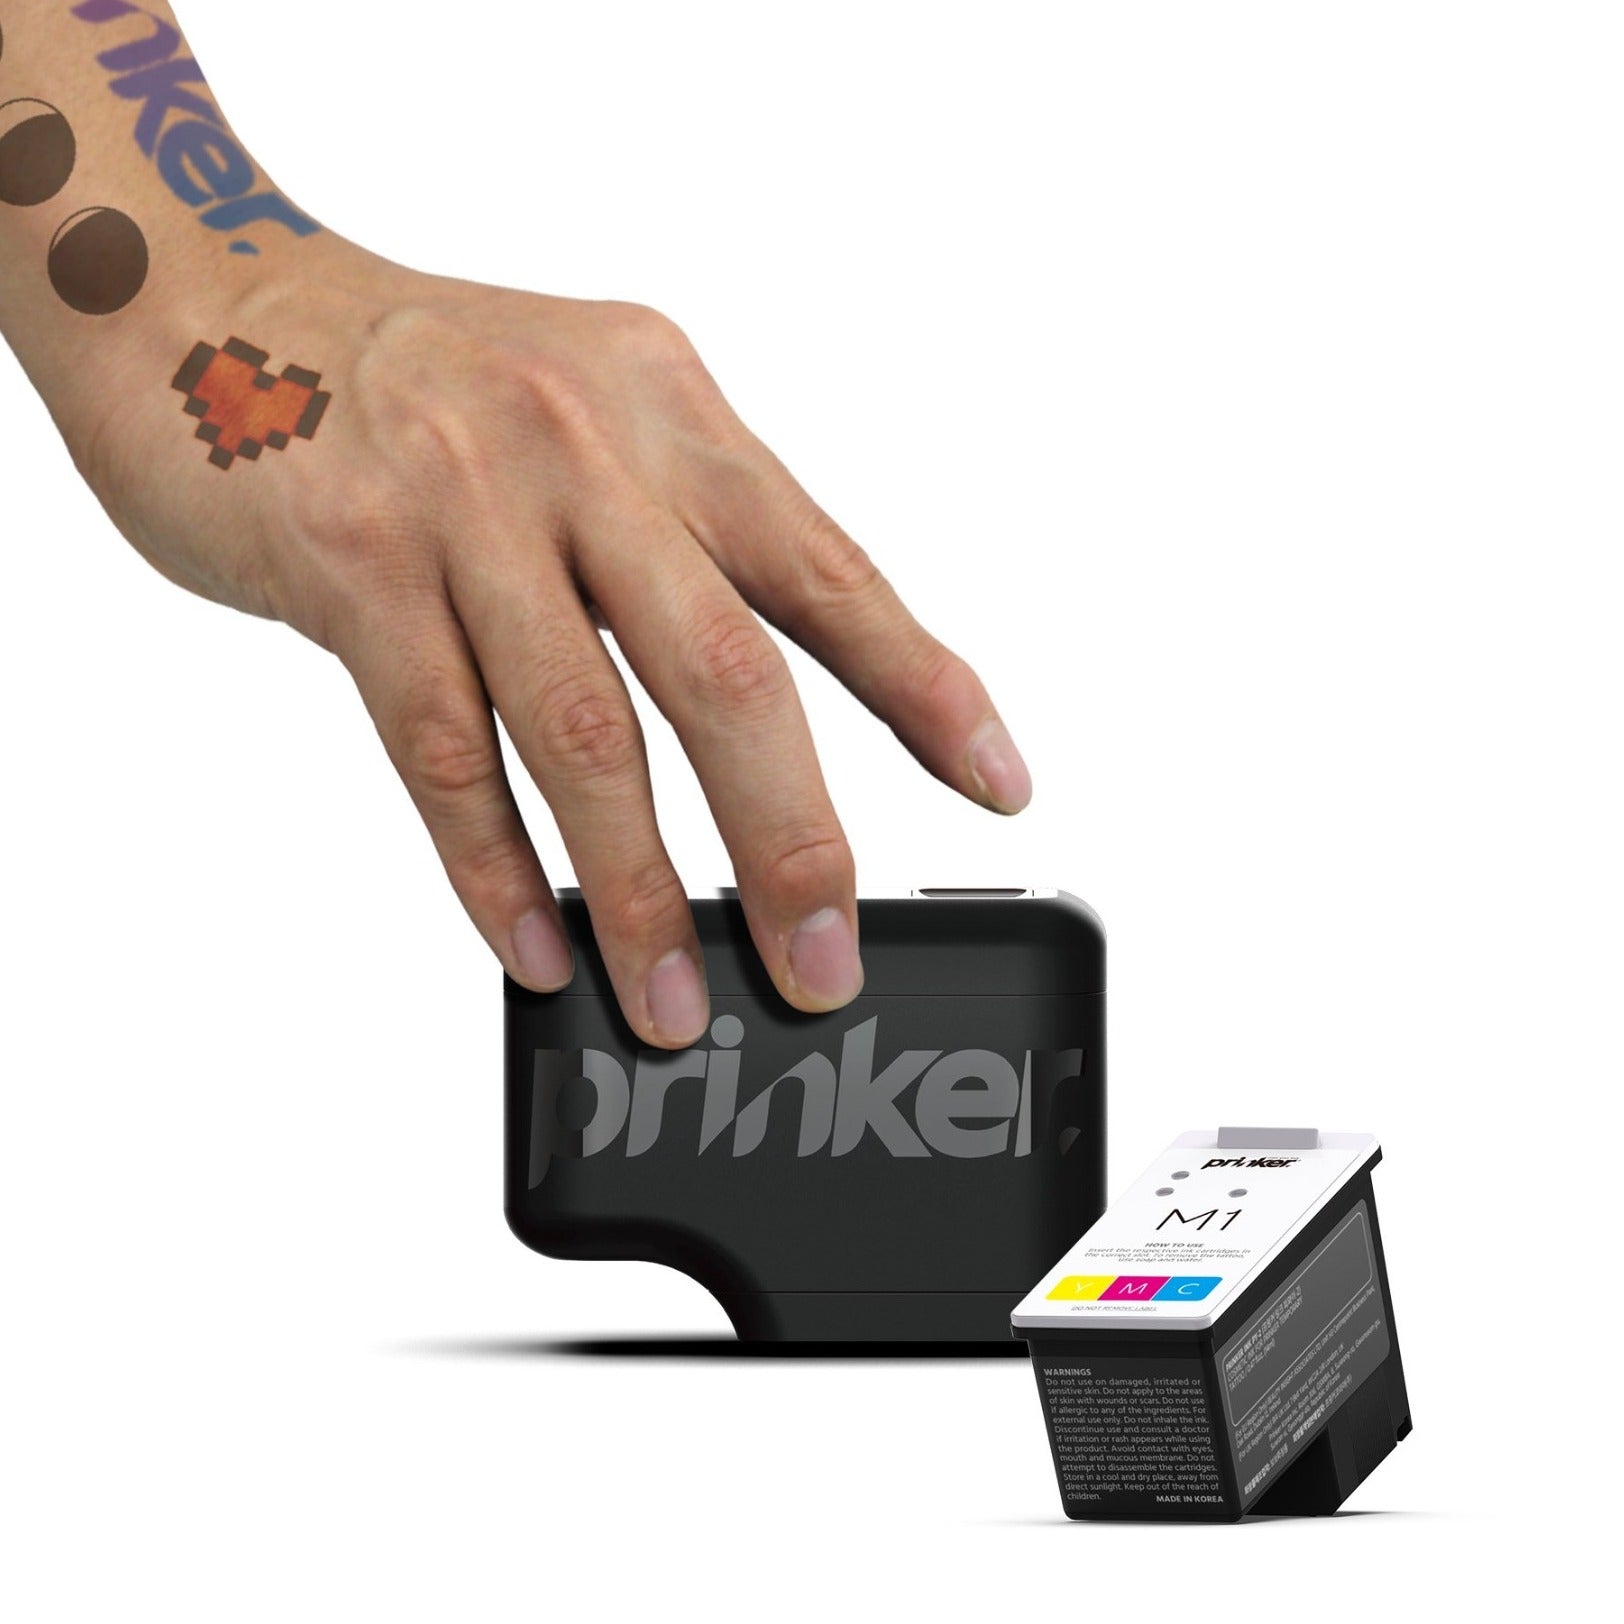 Forver tattoo 25mm Aluminum Tattoo Machine Handle Grip  multi  colours1PIC GOOD QUALITY 100 Permanent Tattoo Kit Price in India  Buy  Forver tattoo 25mm Aluminum Tattoo Machine Handle Grip  multi